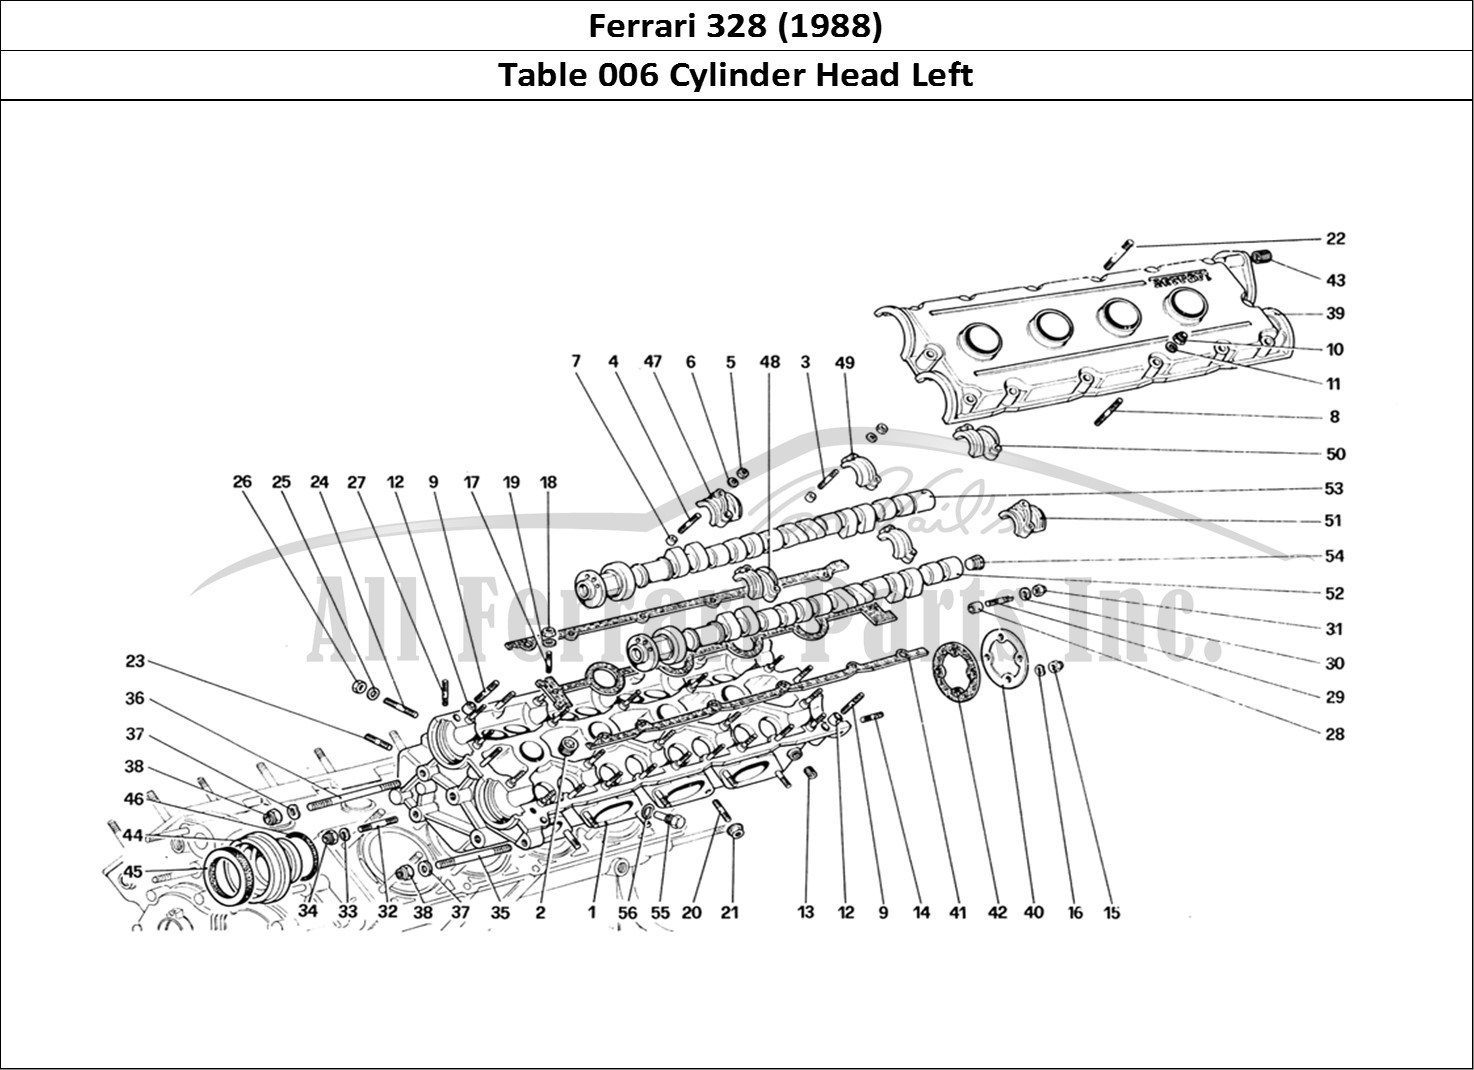 Ferrari Parts Ferrari 328 (1988) Page 006 Cylinder Head (Left)